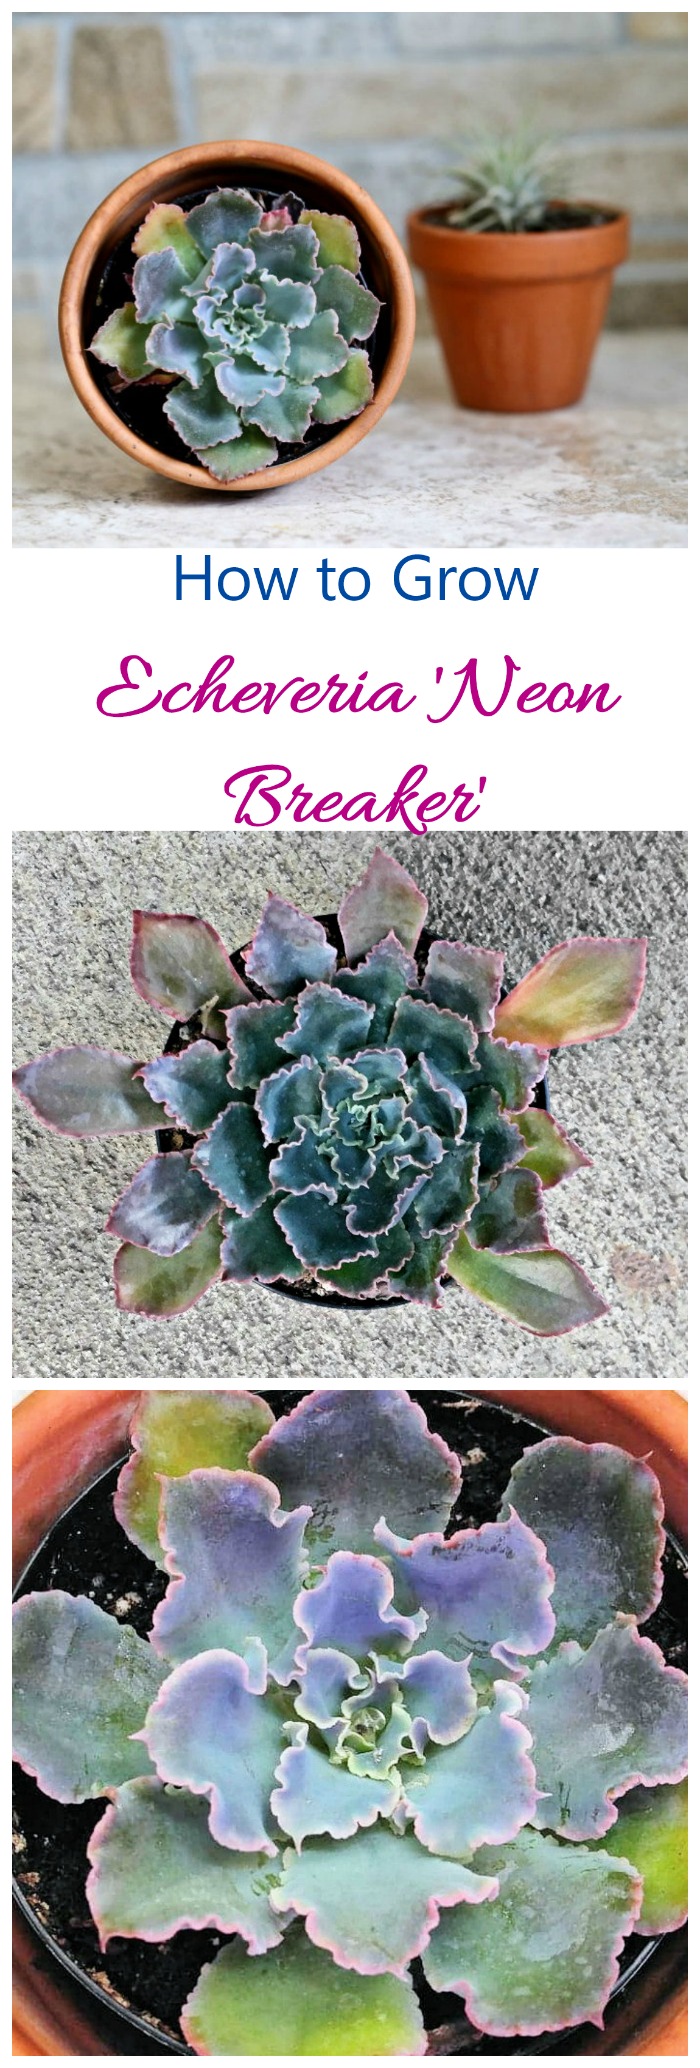 Echeveria Neon Breakers - 种植这种神奇的多肉植物，增添绚丽色彩